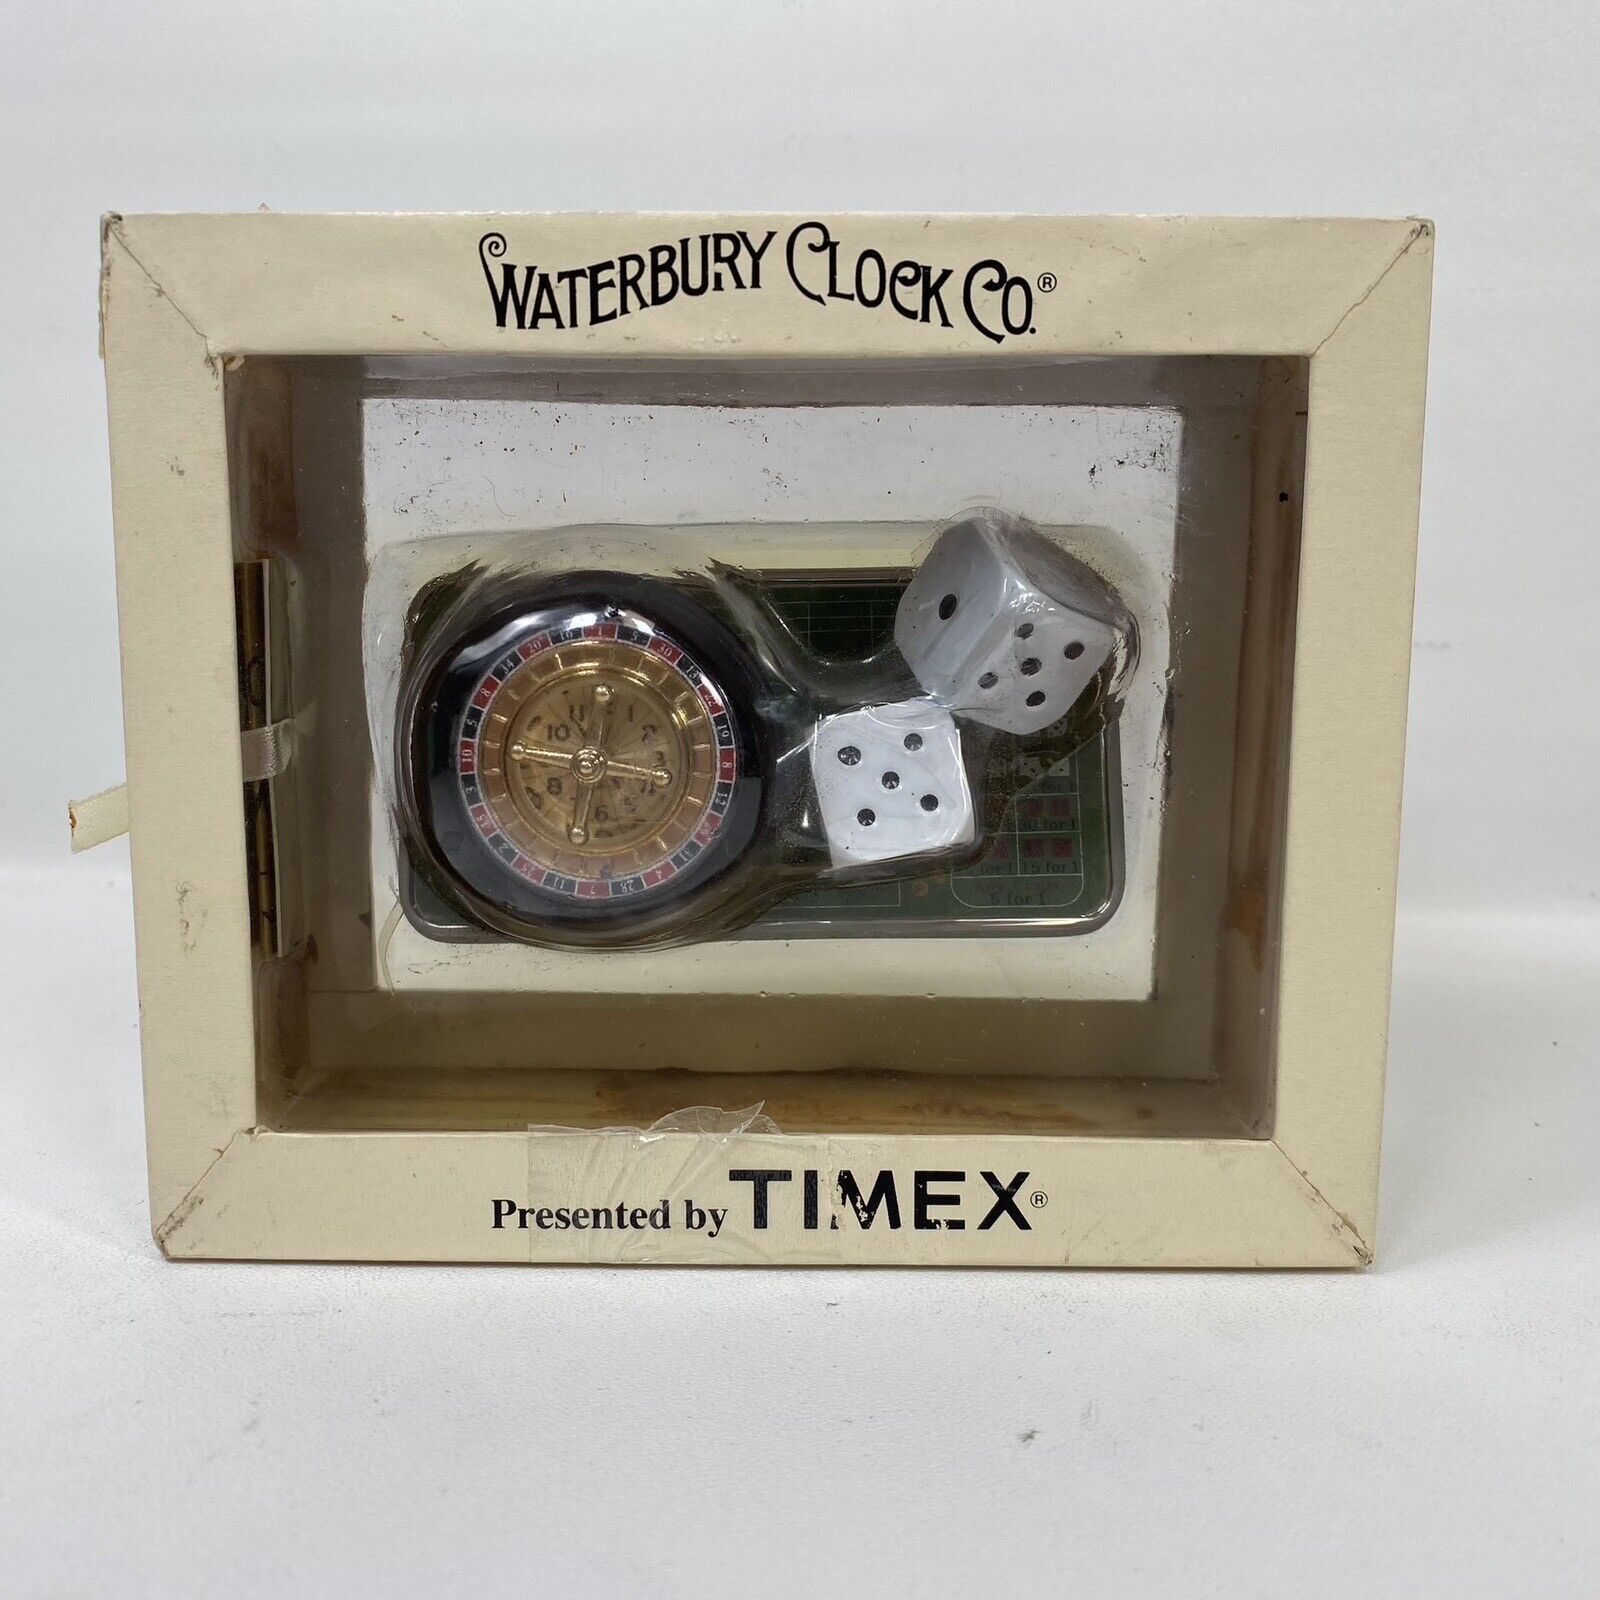 New Vintage Timex Waterbury Clock Co. Desk Roulette Wheel Clock